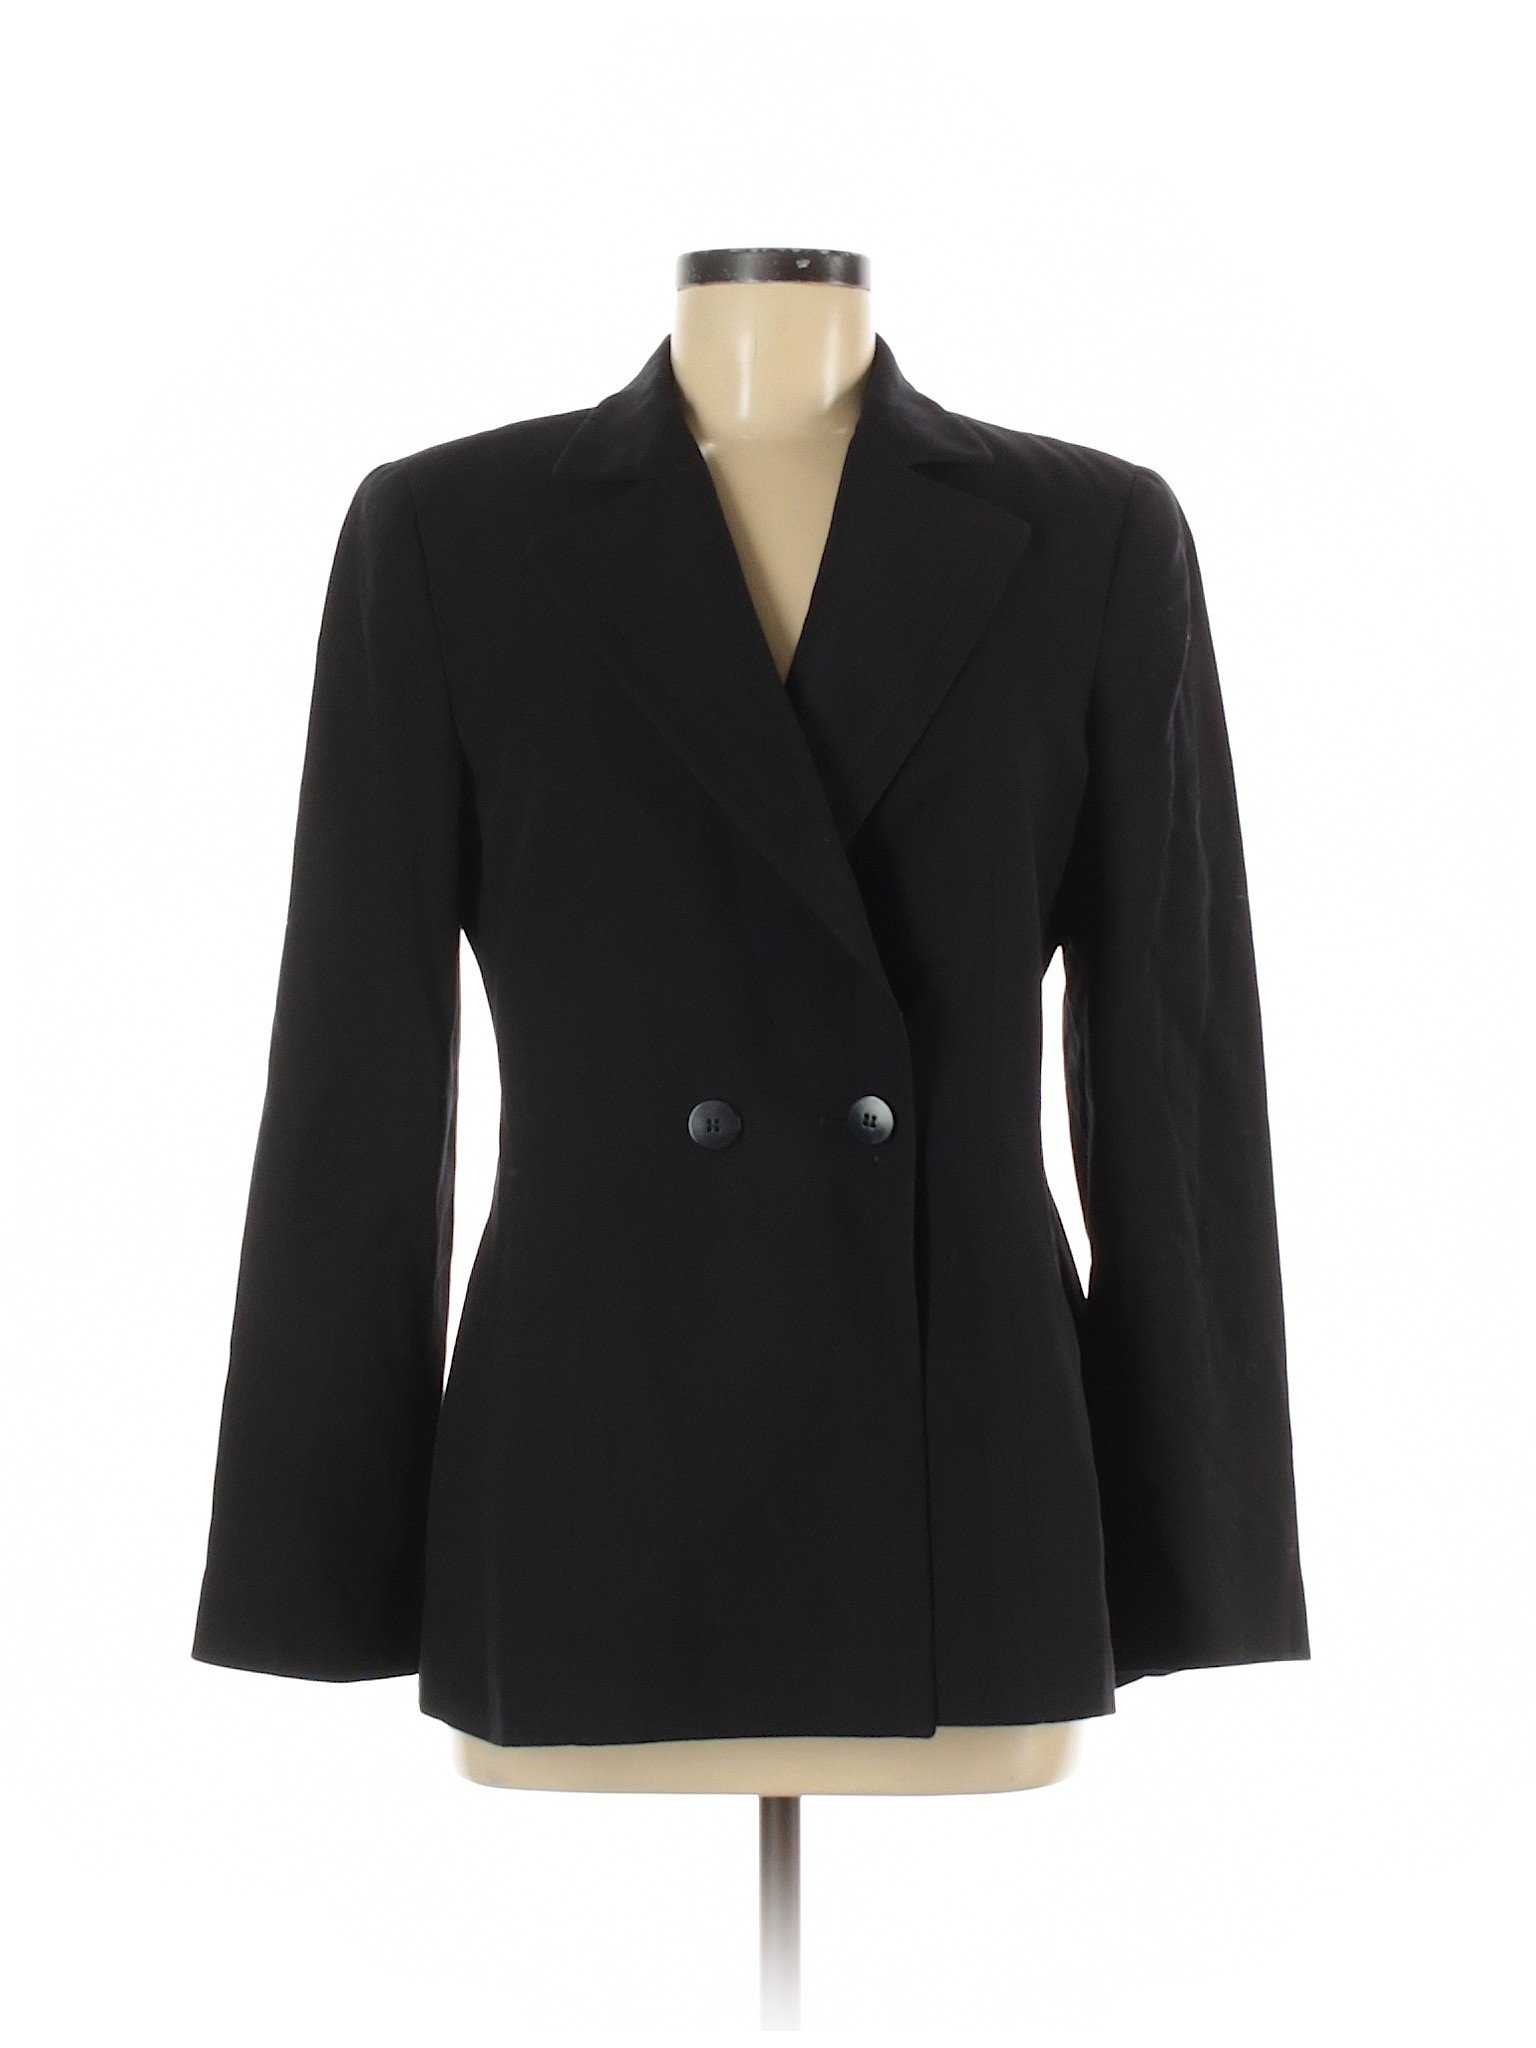 Armani Collezioni Women Black Wool Blazer 8 | eBay